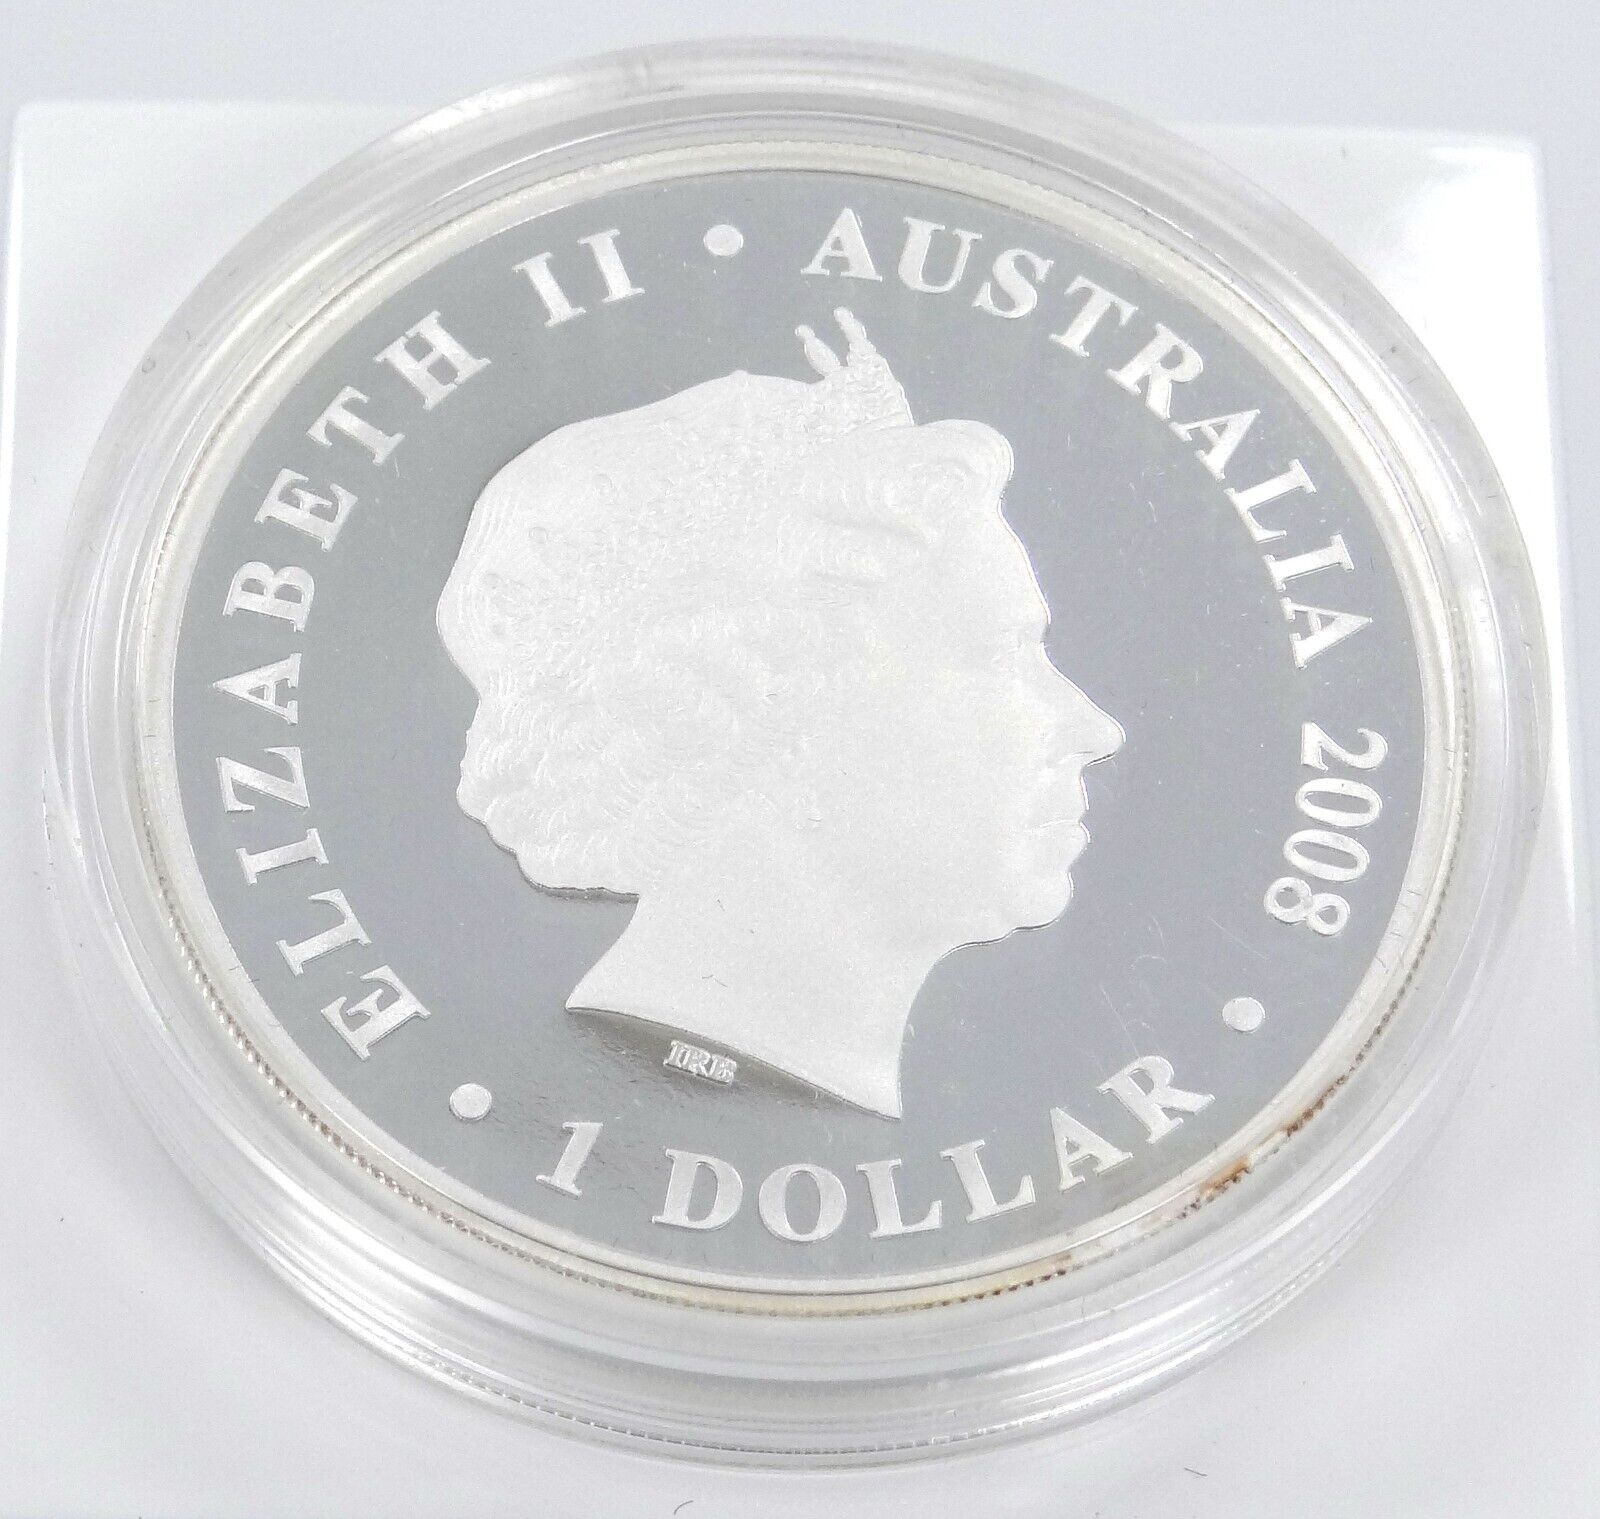 1 Oz Silver Coin 2008 $1 Australia The First Fleets 1788 Captain Arthur Phillip-classypw.com-2